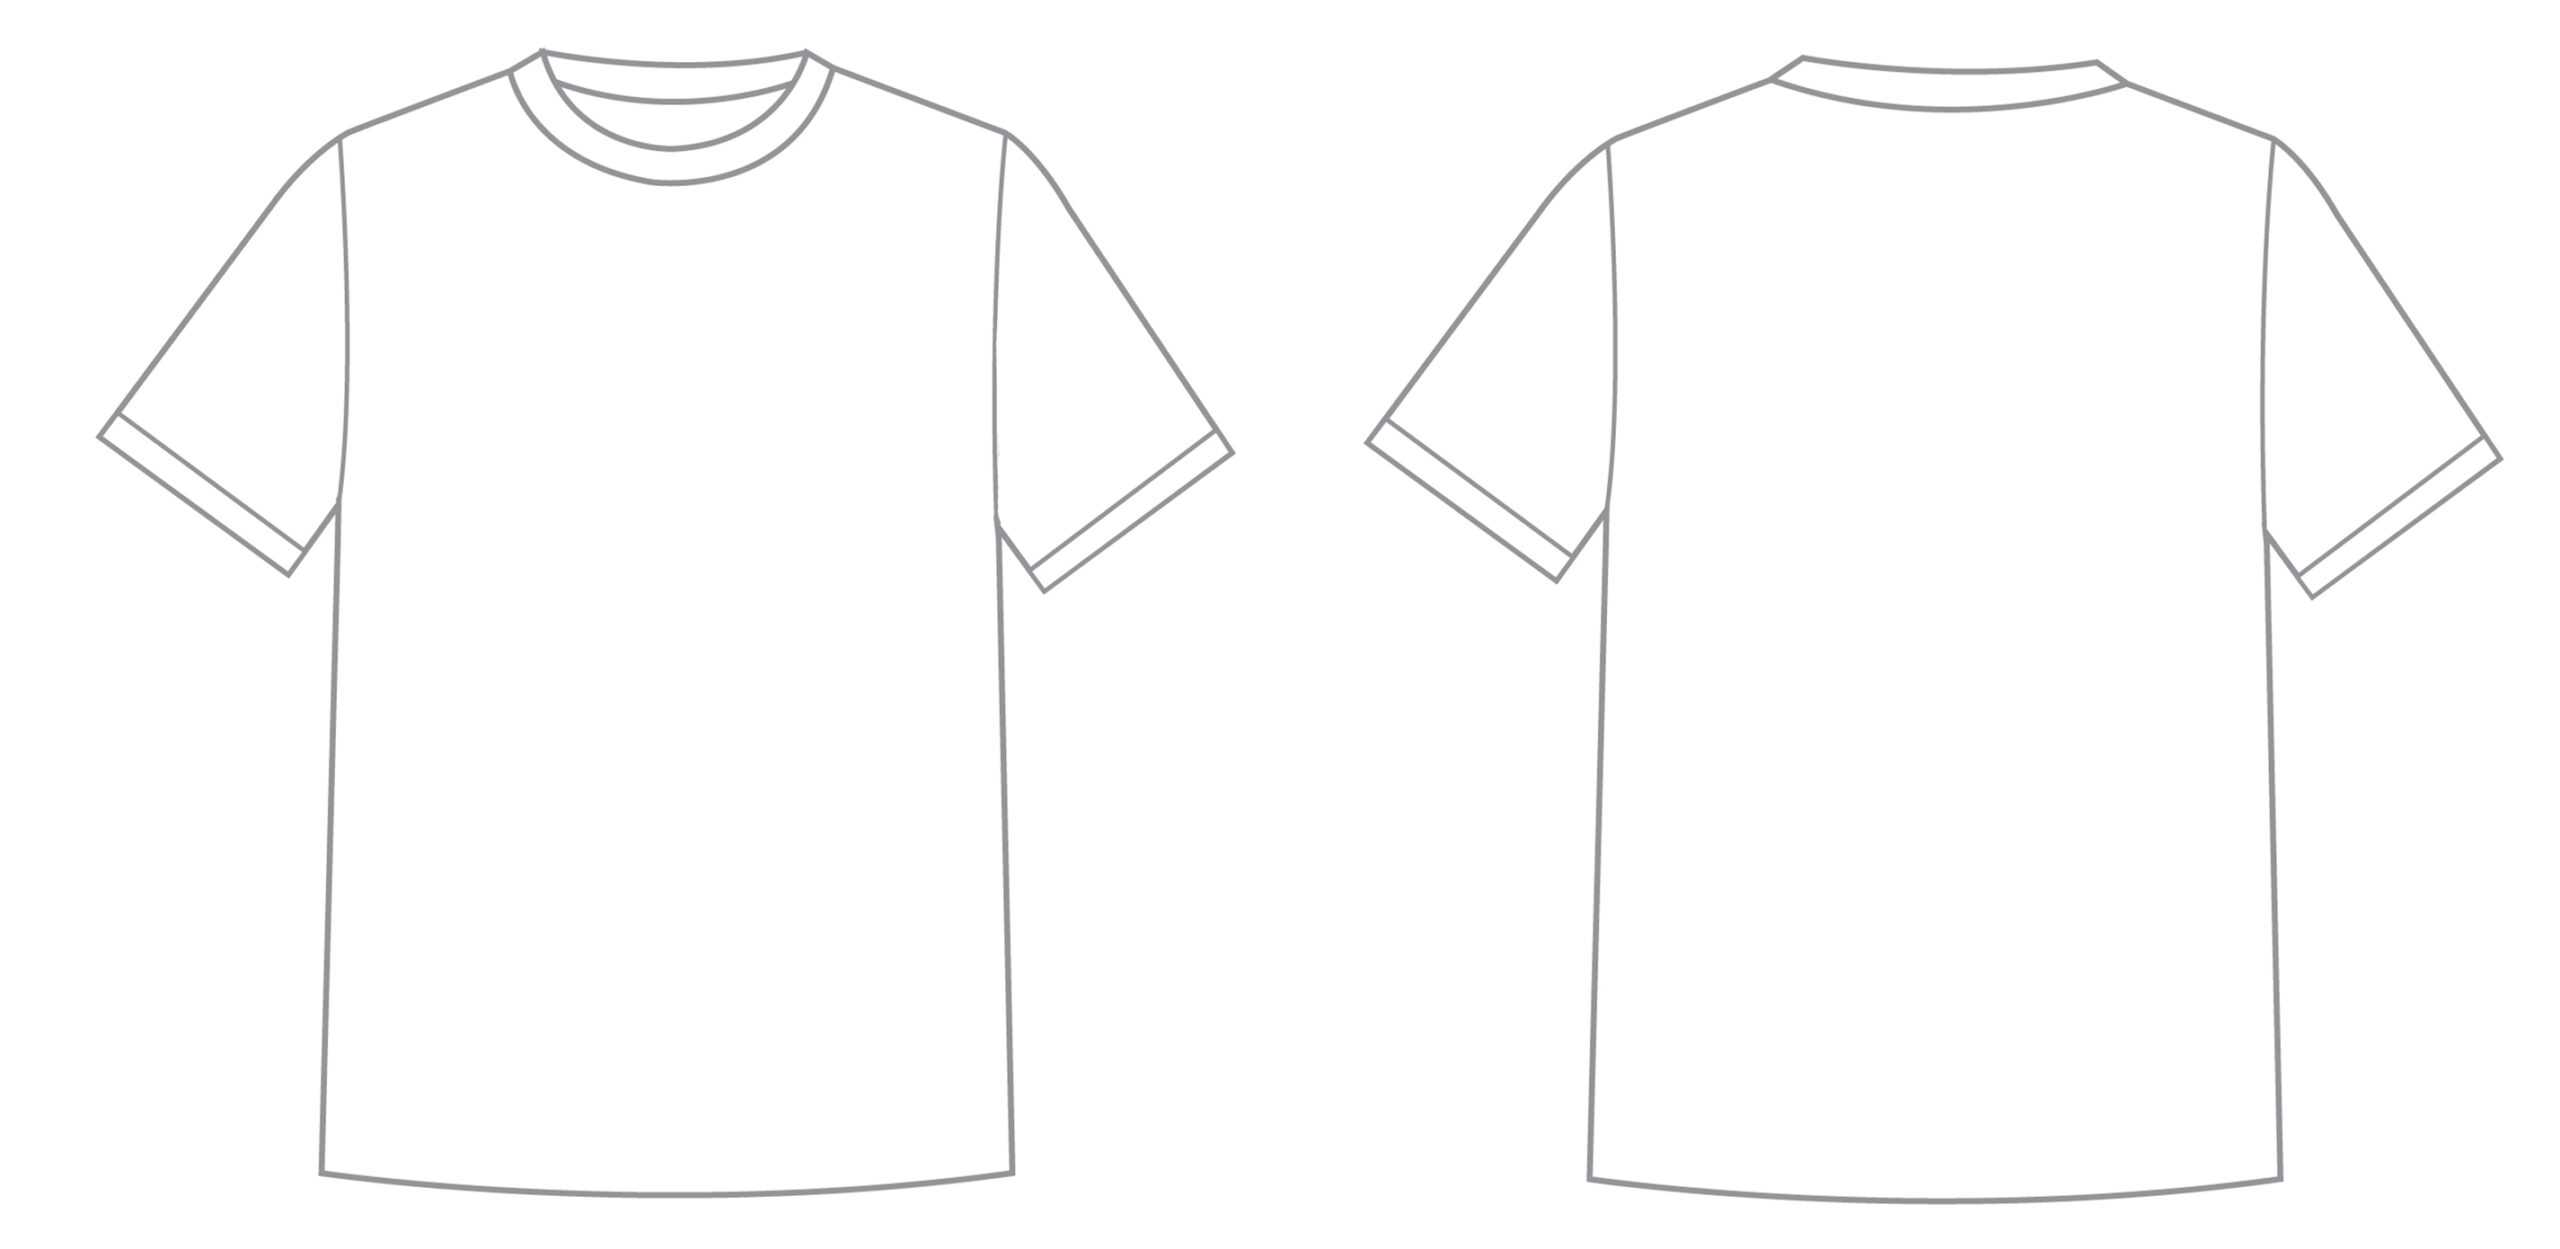 Free Tshirt Template, Download Free Clip Art, Free Clip Art Throughout Blank Tshirt Template Pdf